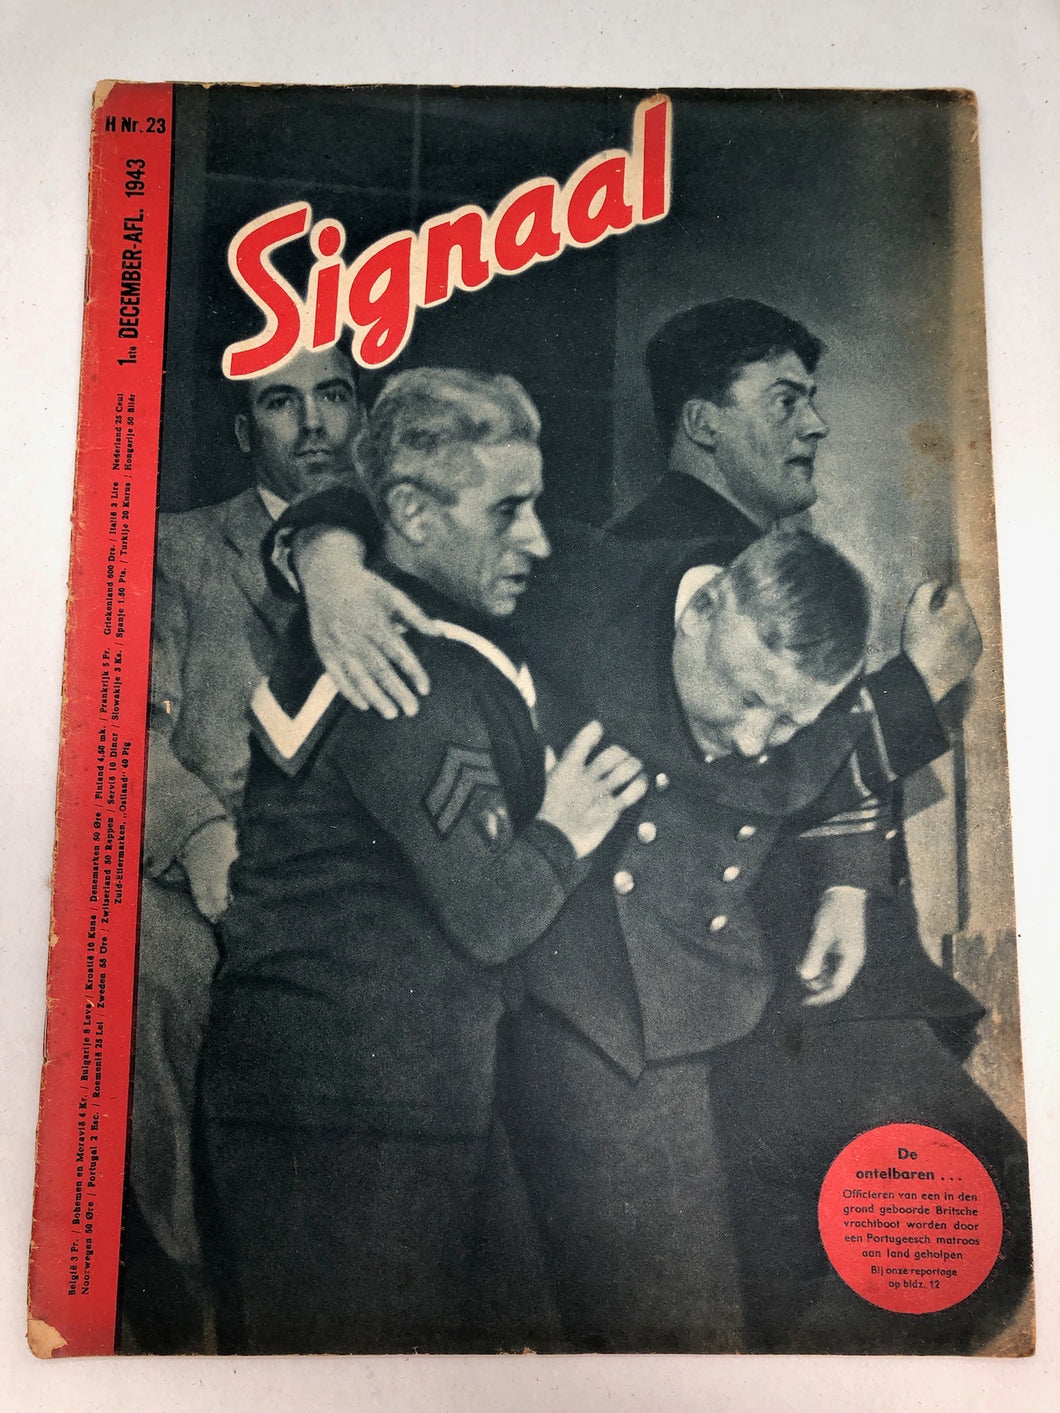 Original Dutch Language WW2 Propaganda Signaal Magazine - No.23 1943